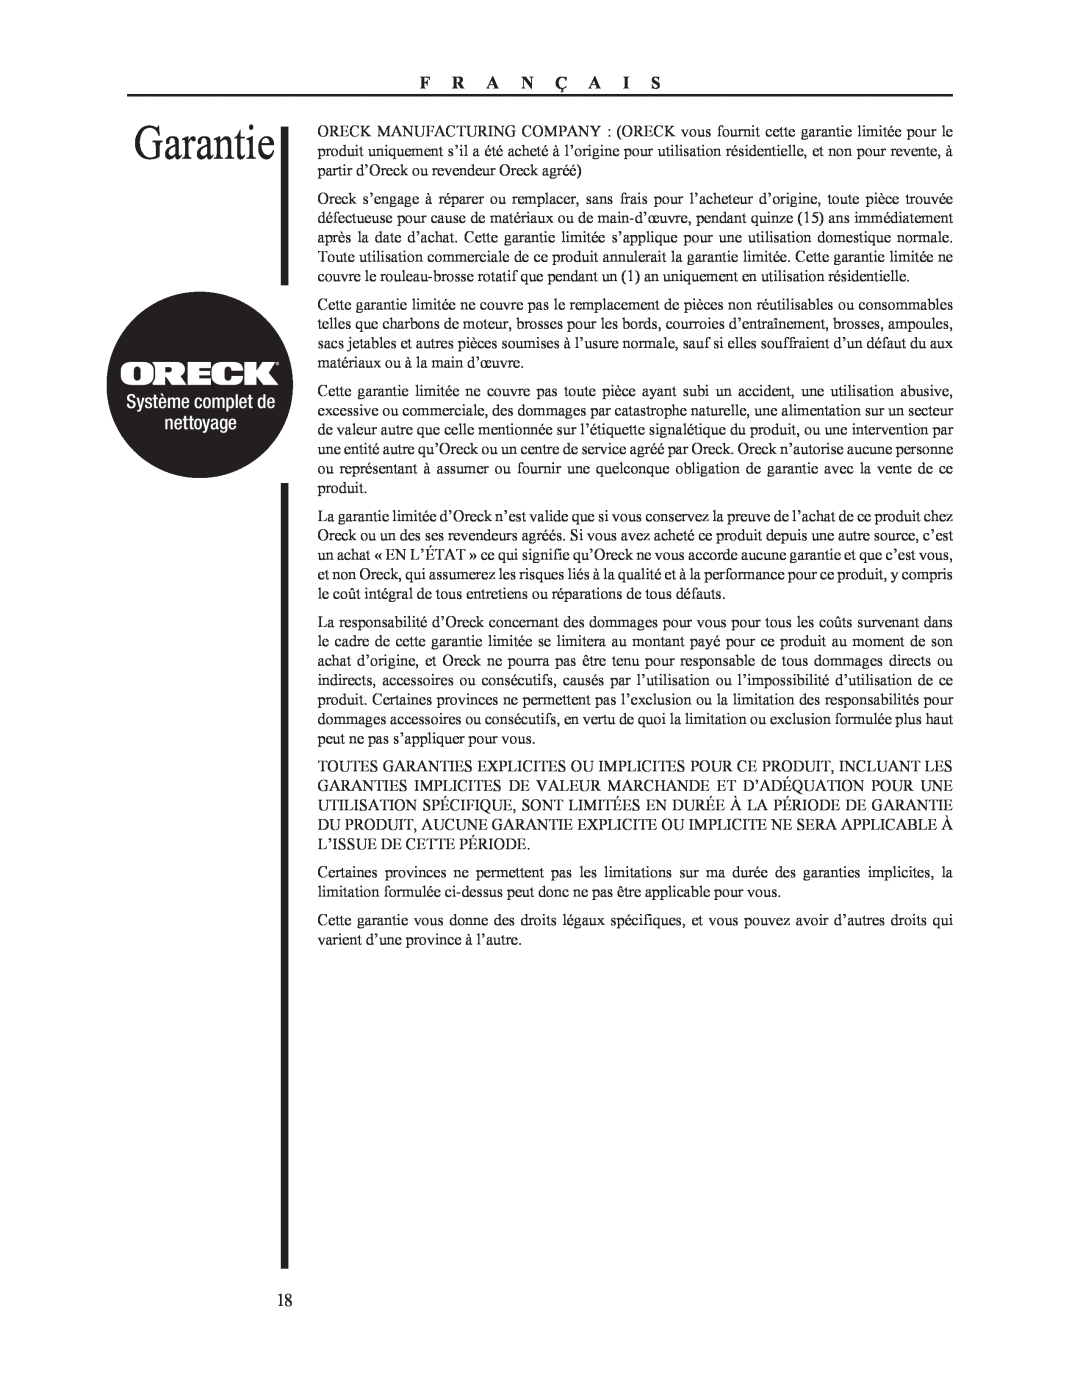 Oreck 79053-01REVA manual Garantie, Système complet de nettoyage, F R A N Ç A I S 